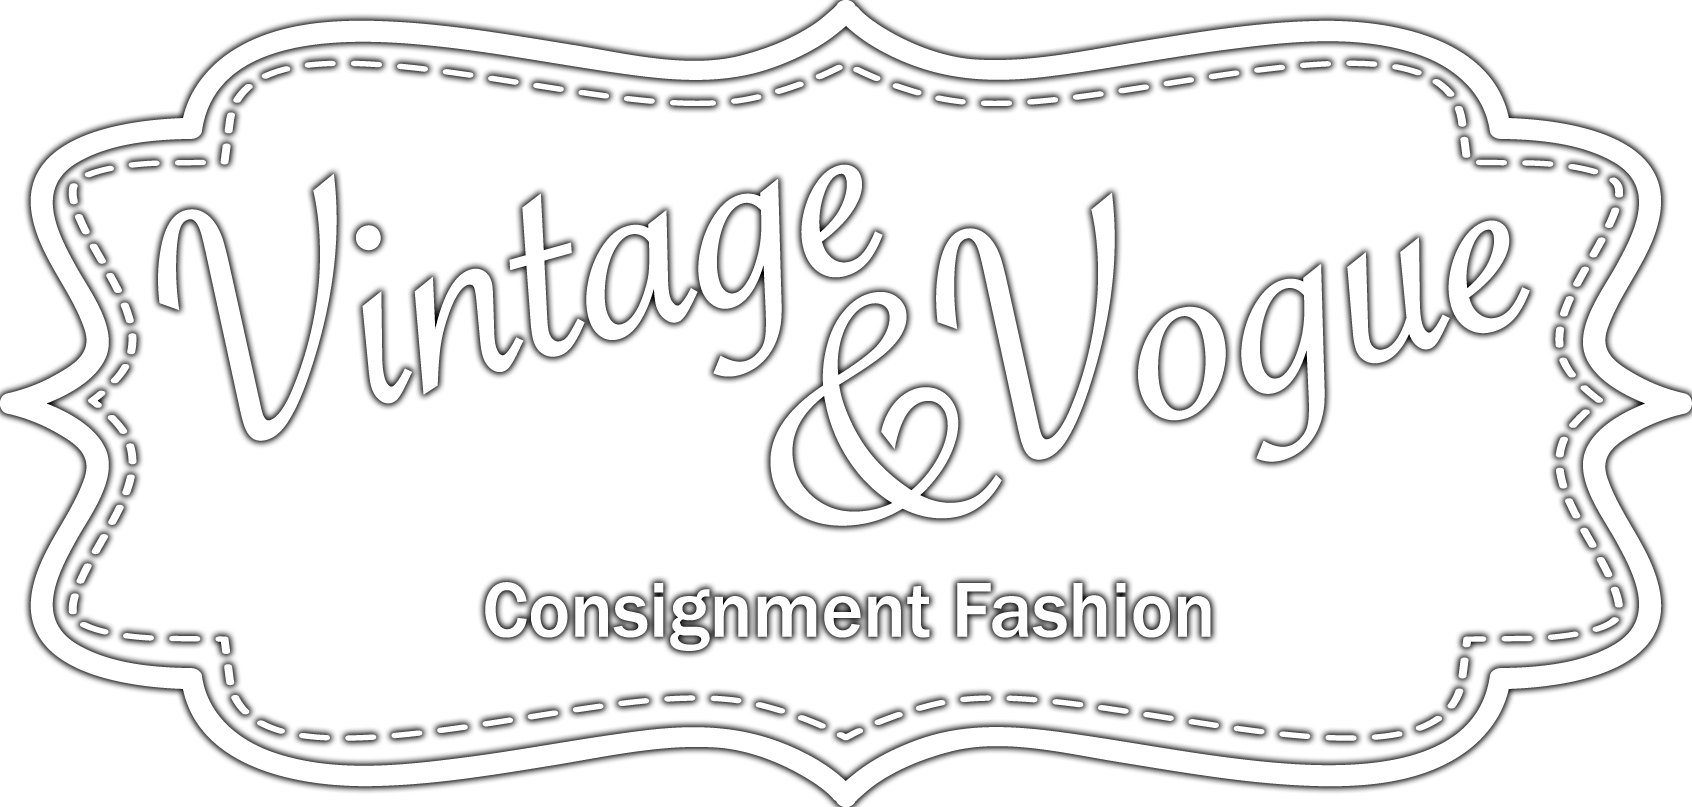 Vintage Vogue Consignment Fashion Logo PNG